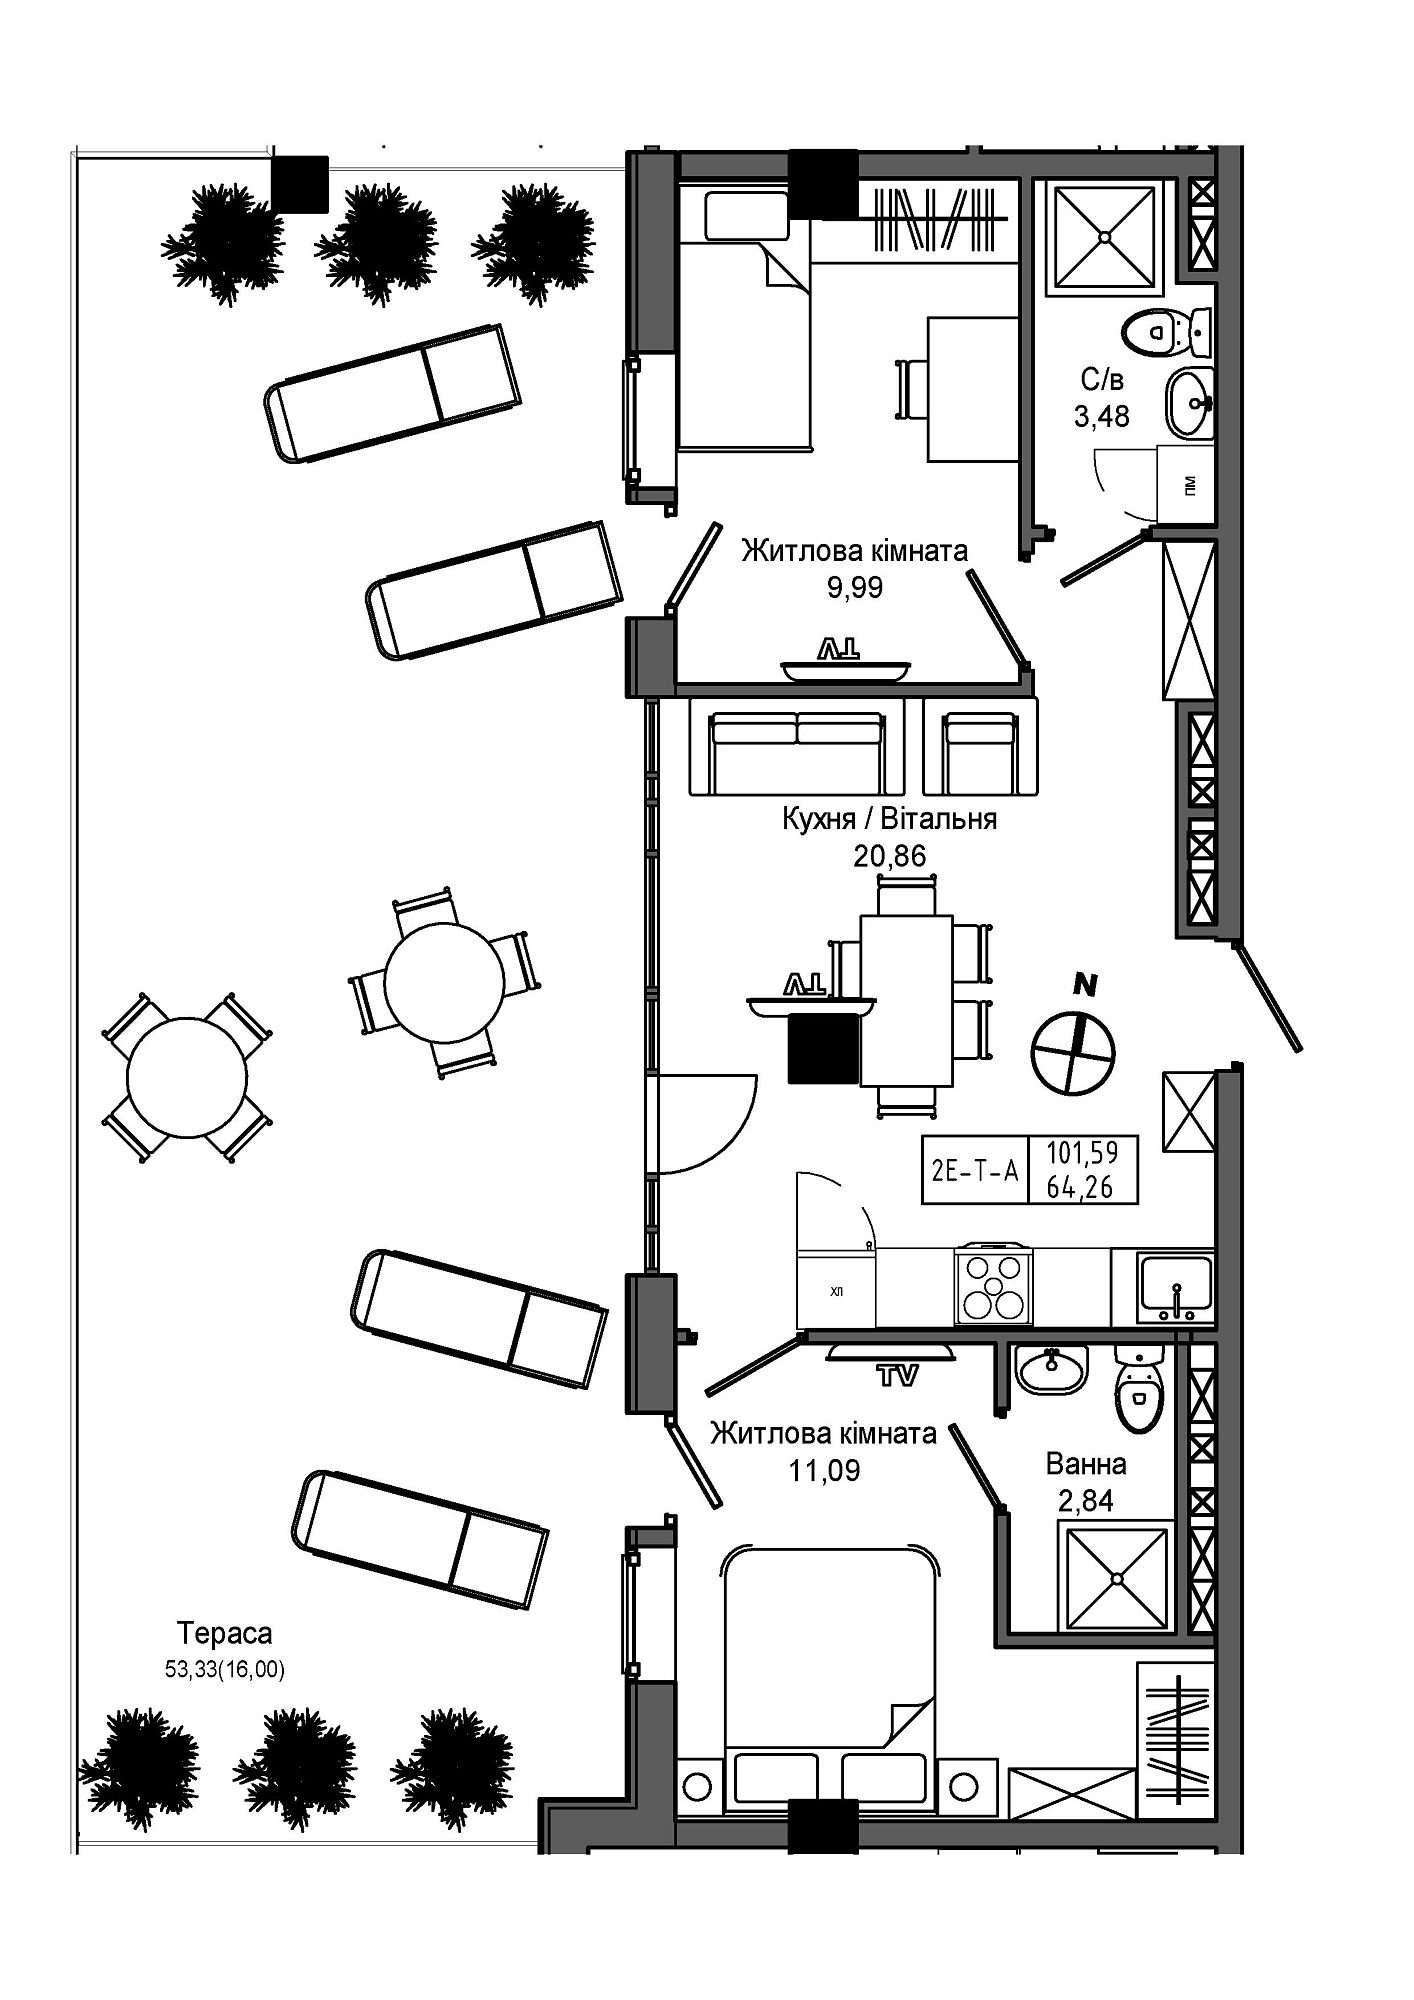 Планування 2-к квартира площею 64.26м2, UM-006-04/0014.